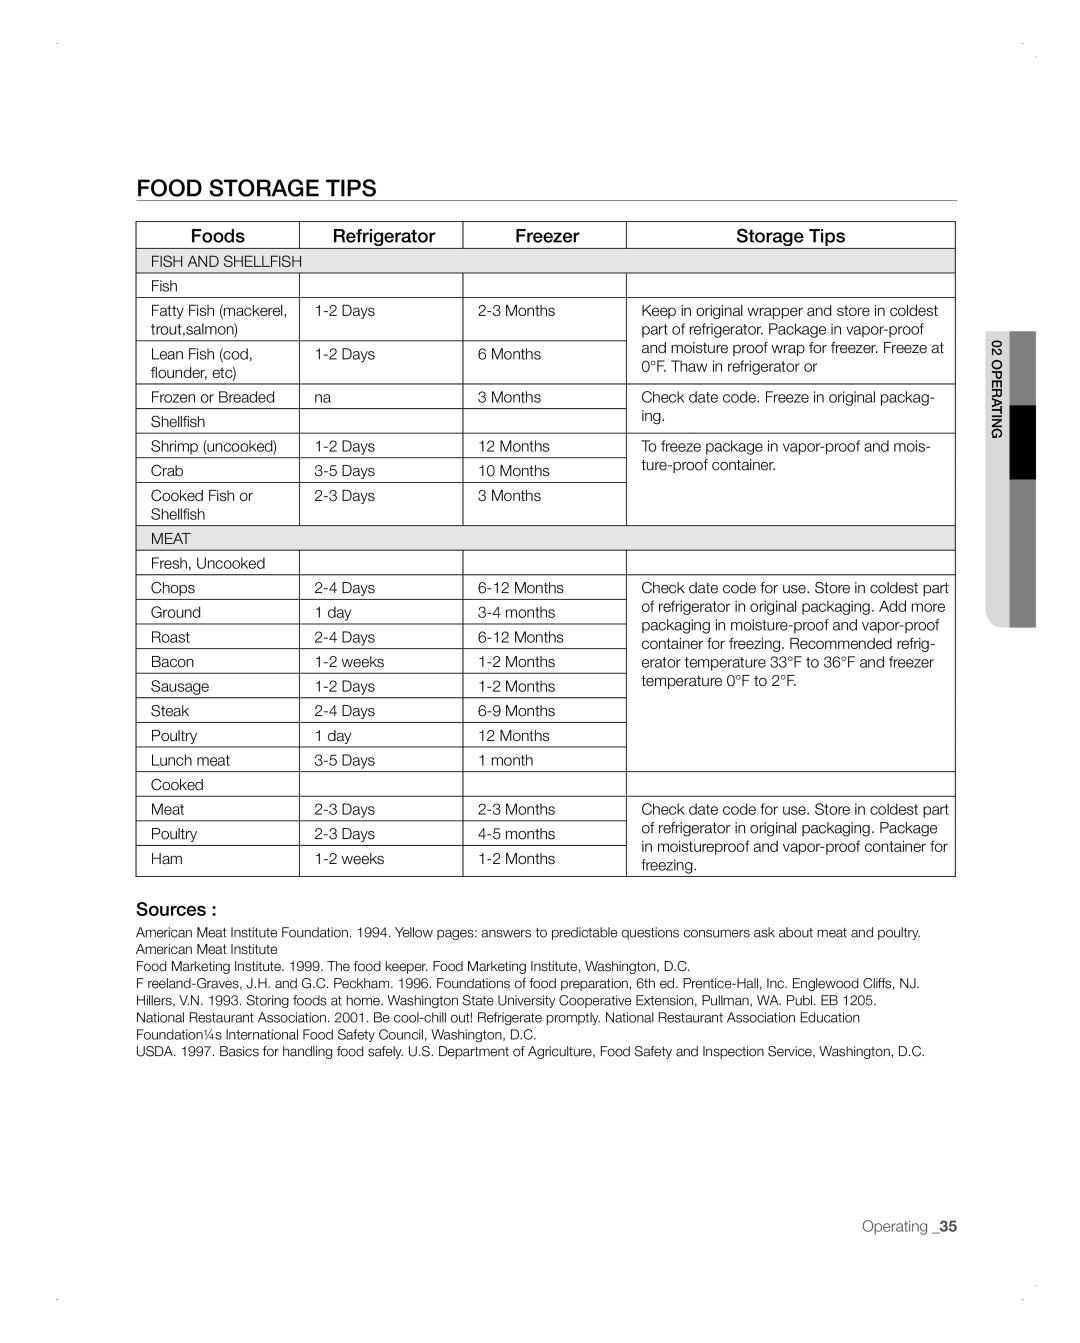 Samsung RFG298AARS user manual Food Storage Tips, Foods, Refrigerator, Freezer, Sources, Operating 